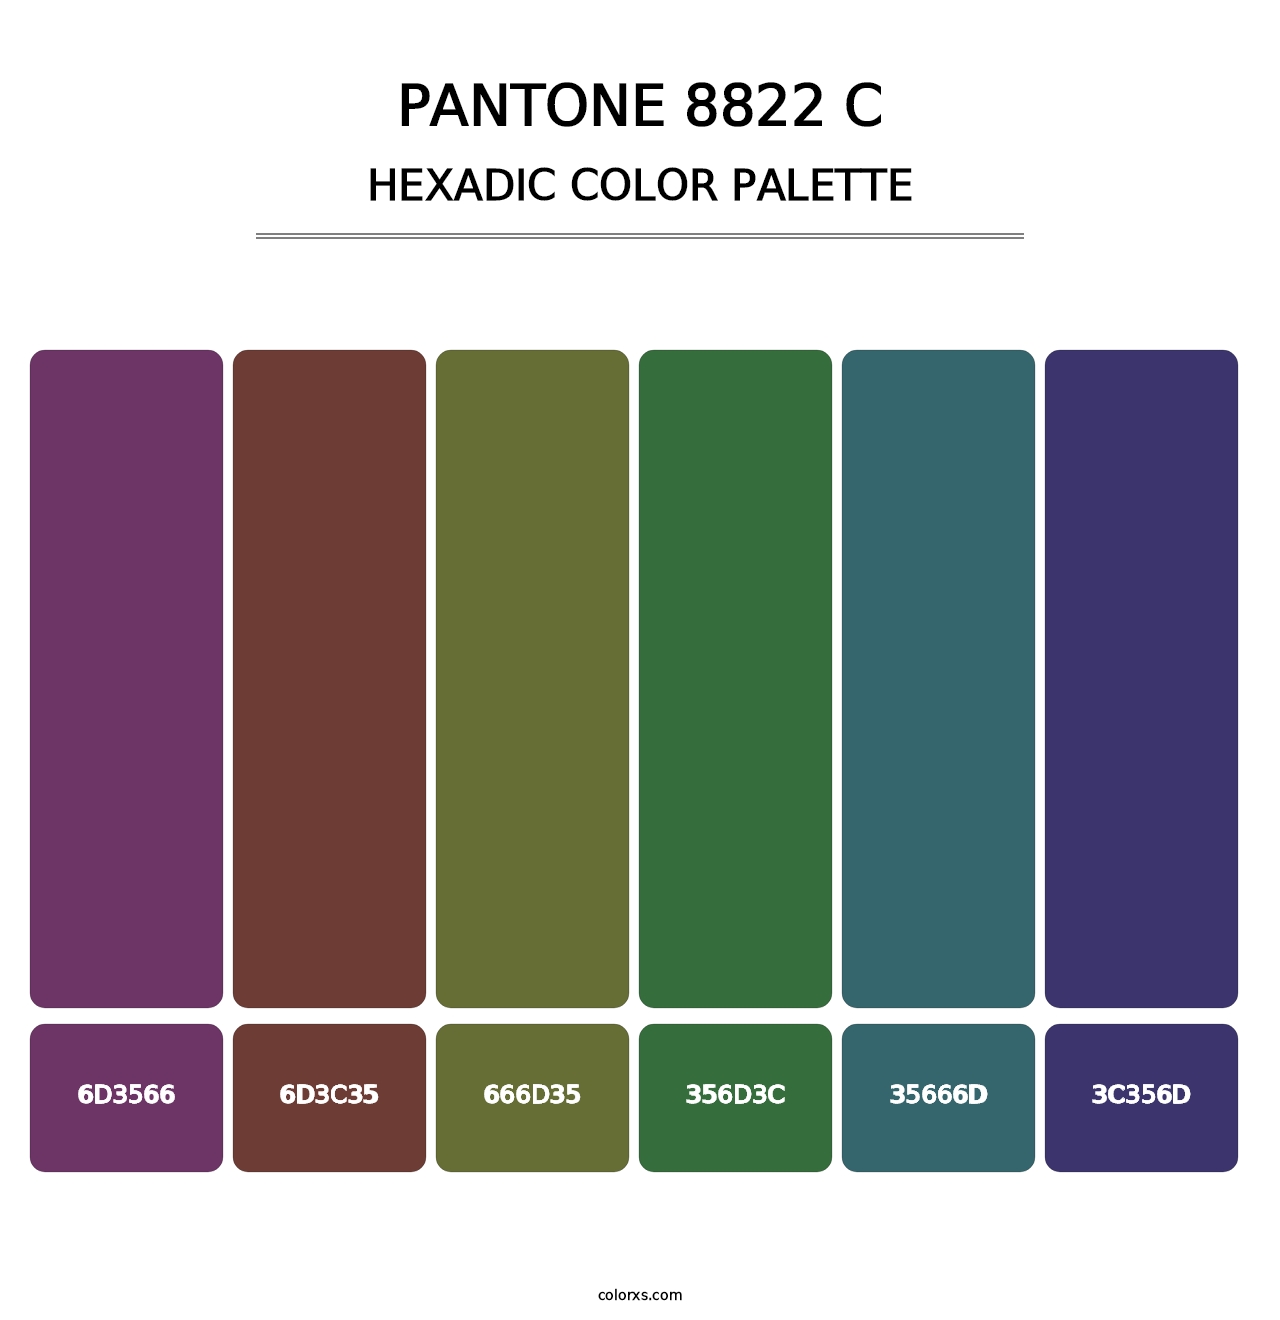 PANTONE 8822 C - Hexadic Color Palette